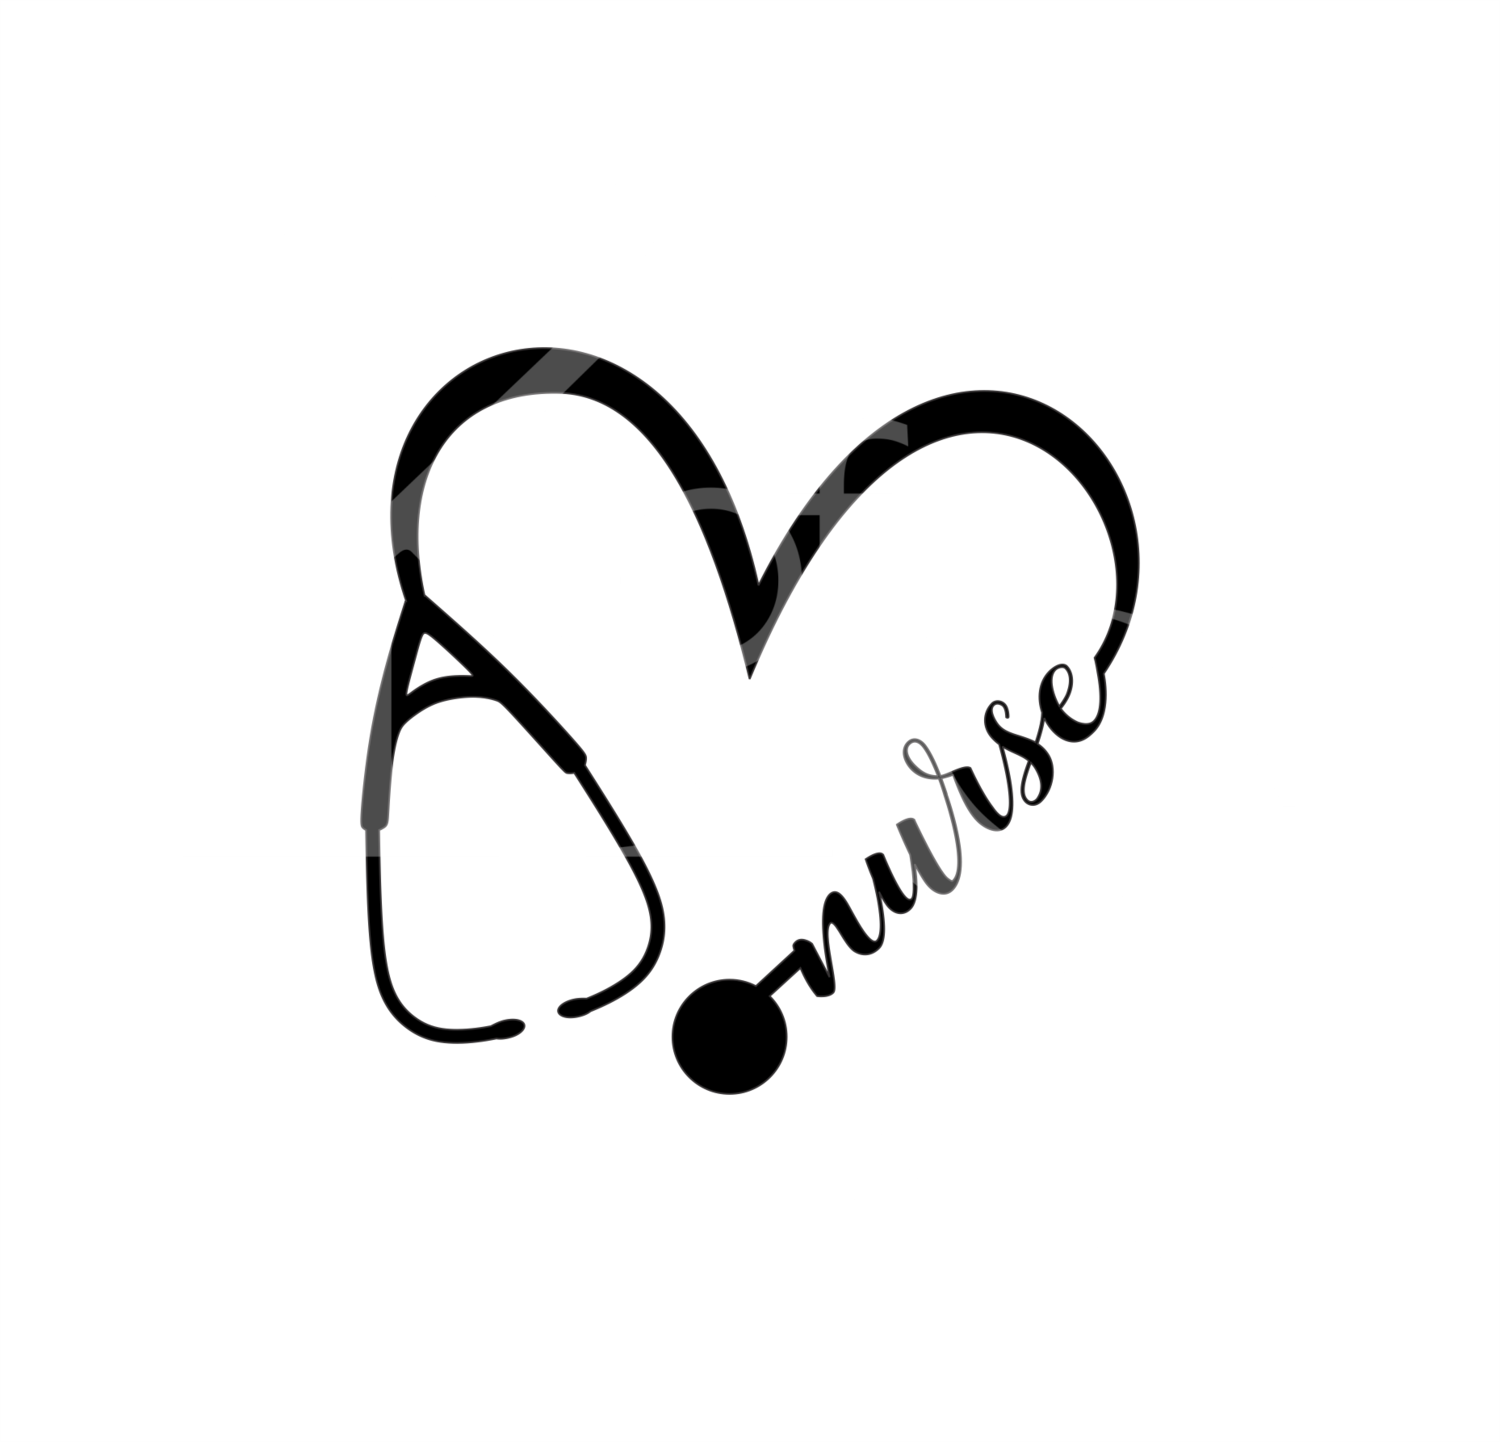 Nurse Heart SVG, Nurse Stethescope Svg Files for Cricut, Iron On, Digital Download, Nurse 2020, Instant Download, Silhouette Cameo, Cricut